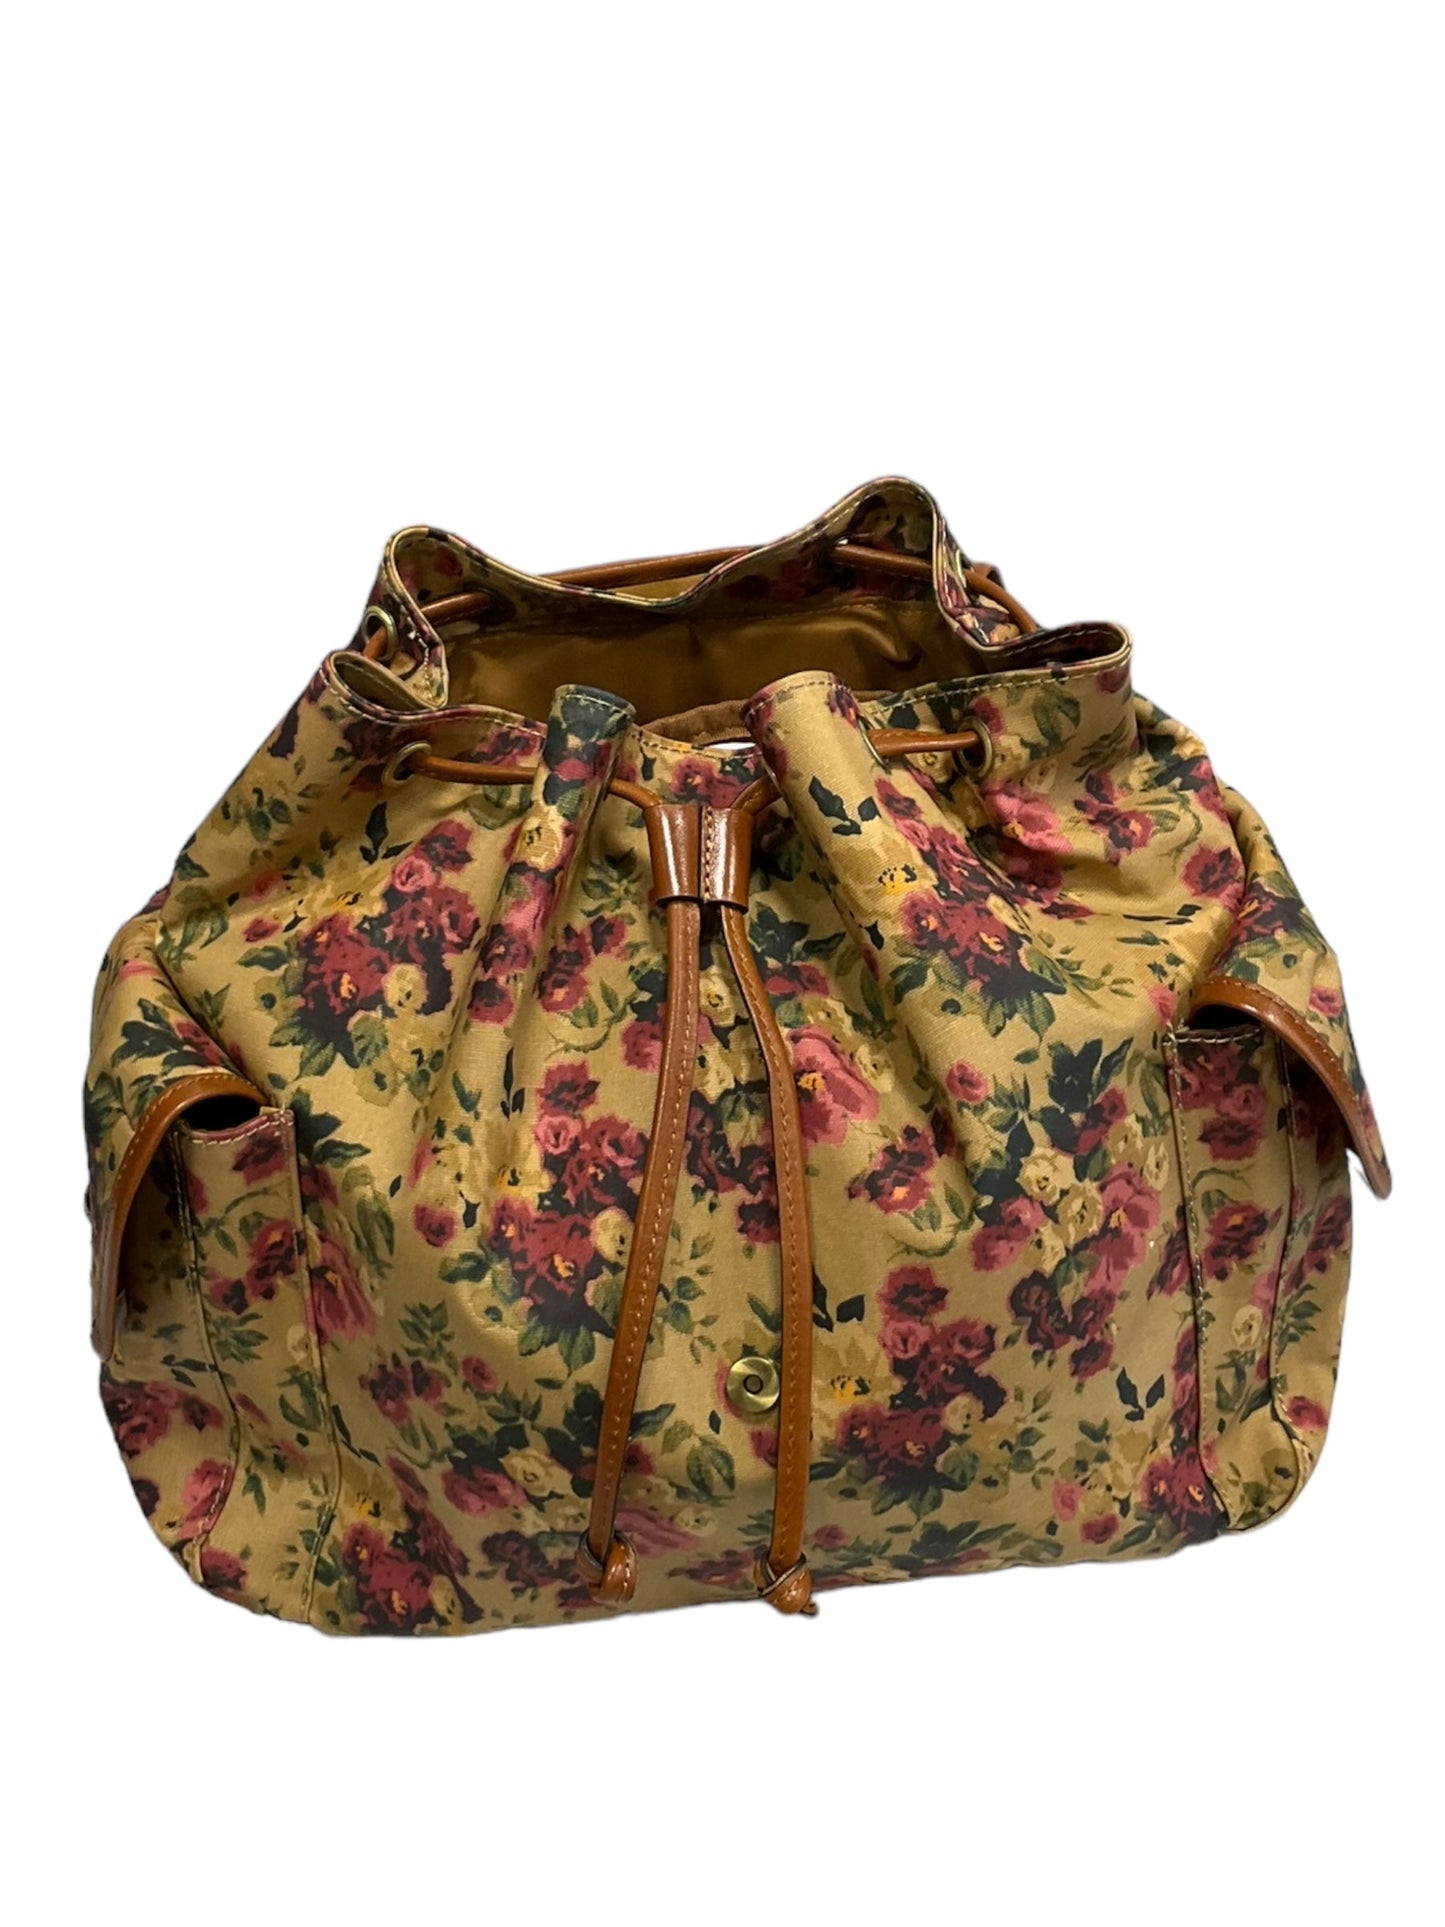 Backpack Patricia Nash, Size Medium